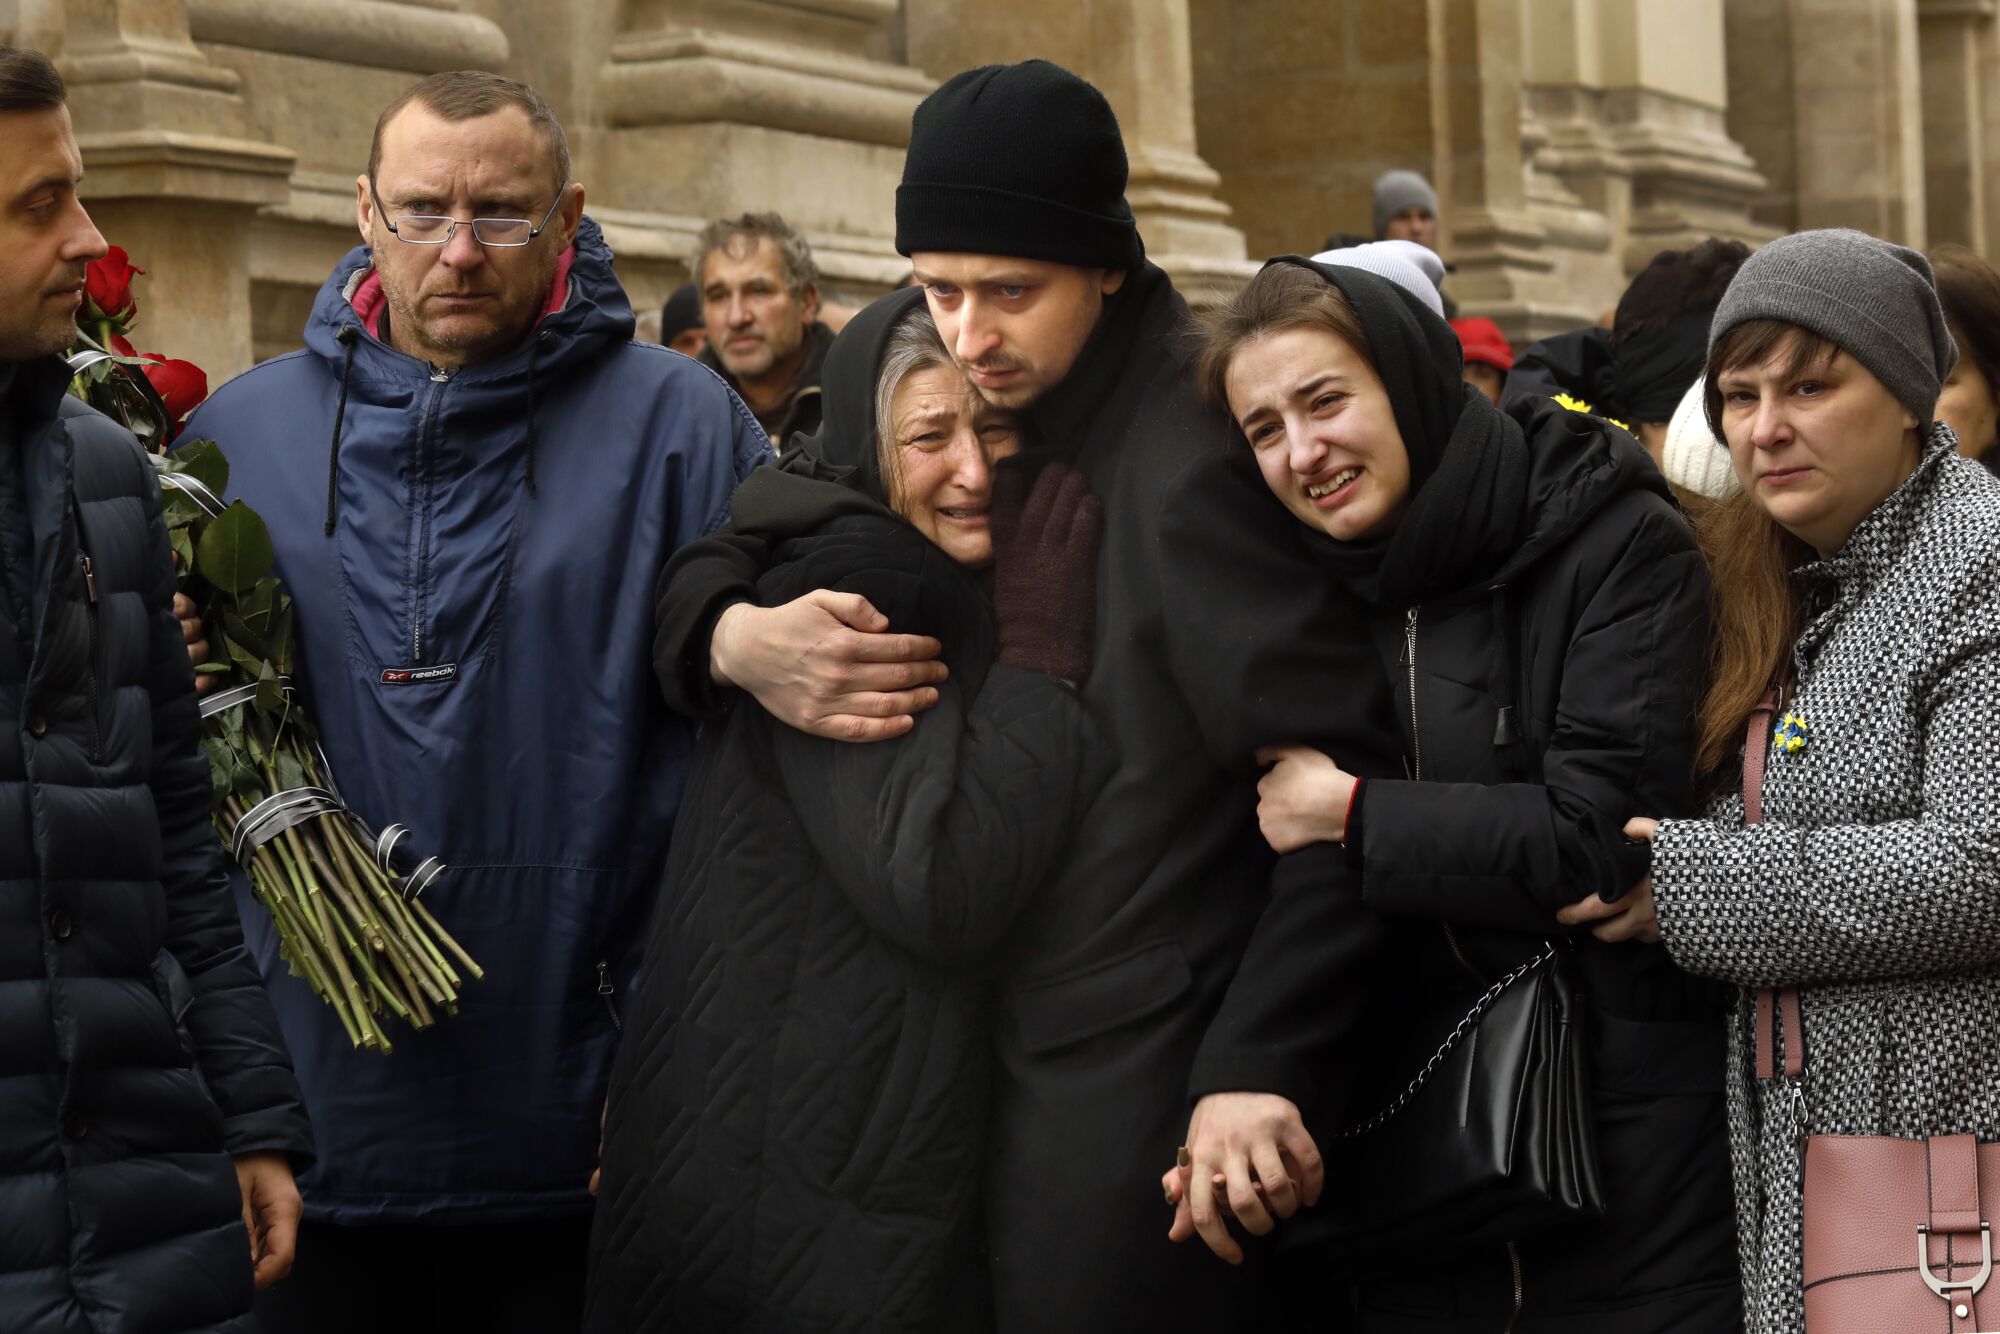 The funeral for Denis Metyolkinat the Saints Peter and Paul Garrison Church in Lviv, Ukraine.